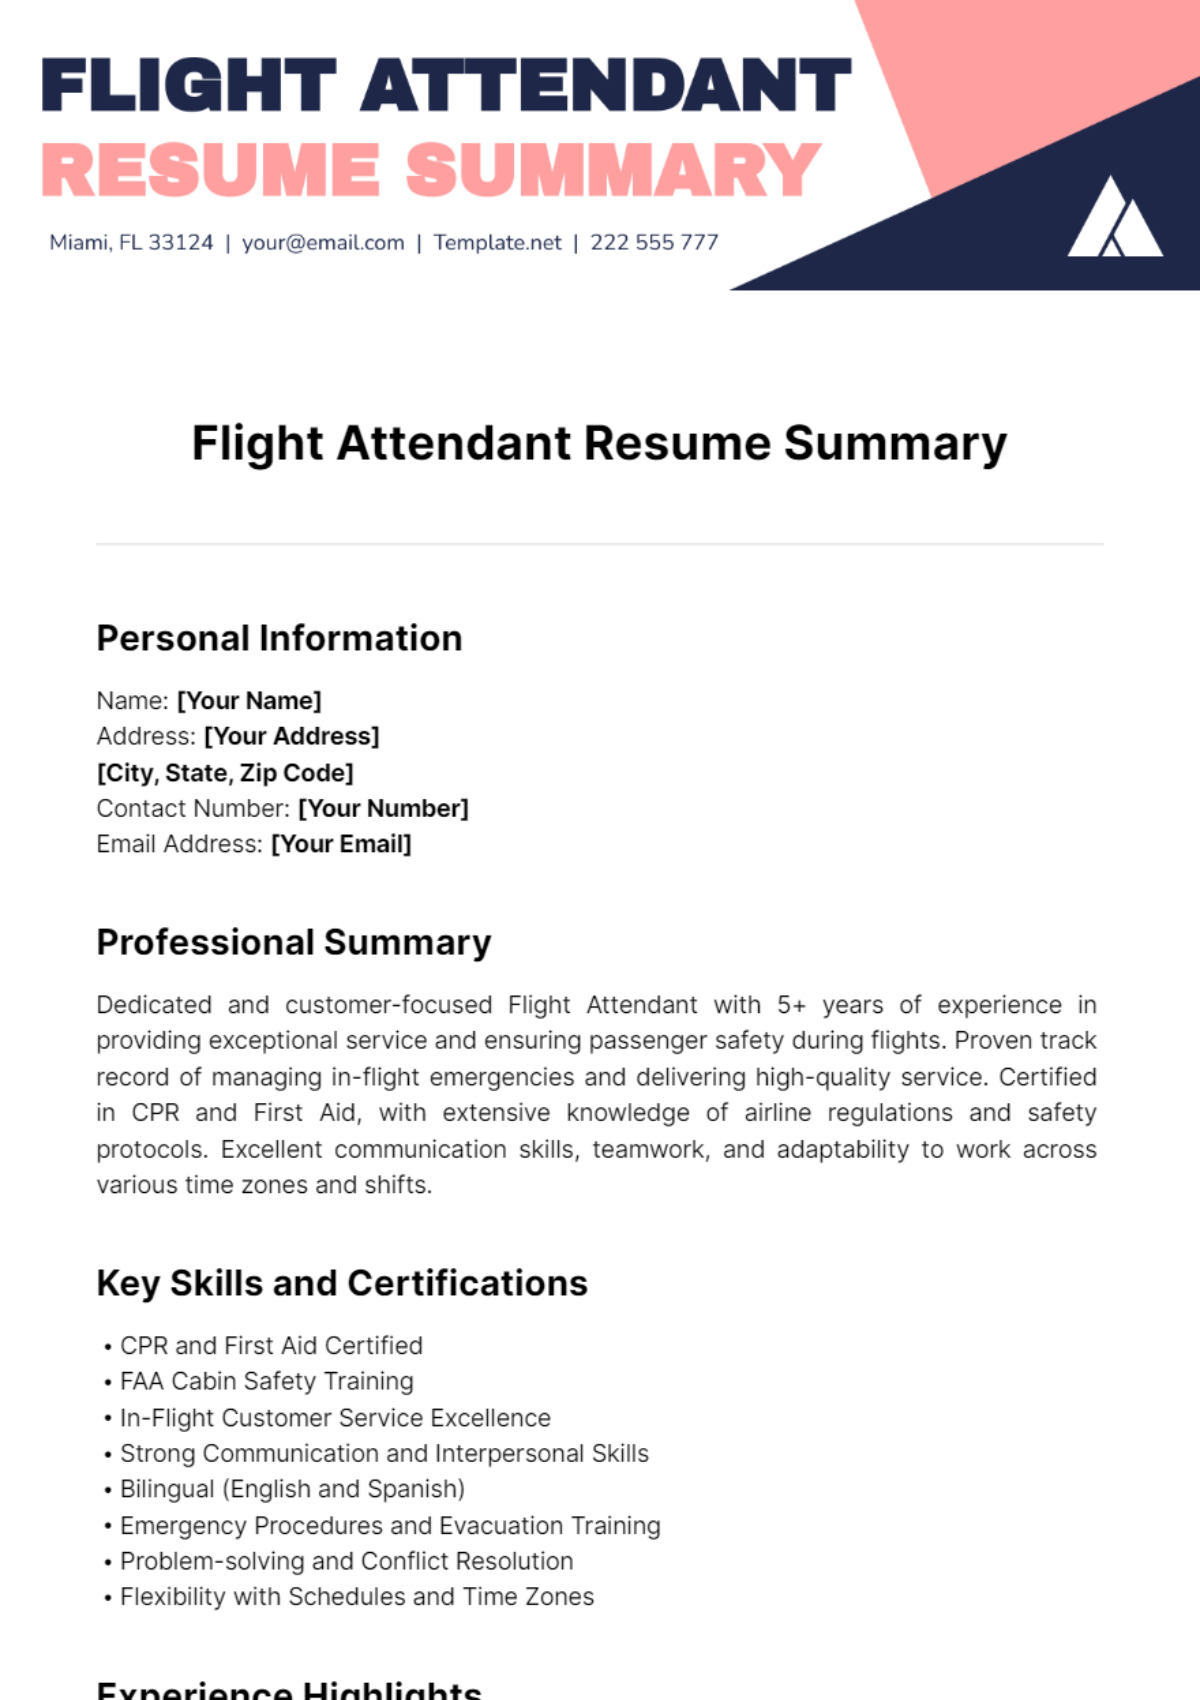 Flight Attendant Resume Summary Template